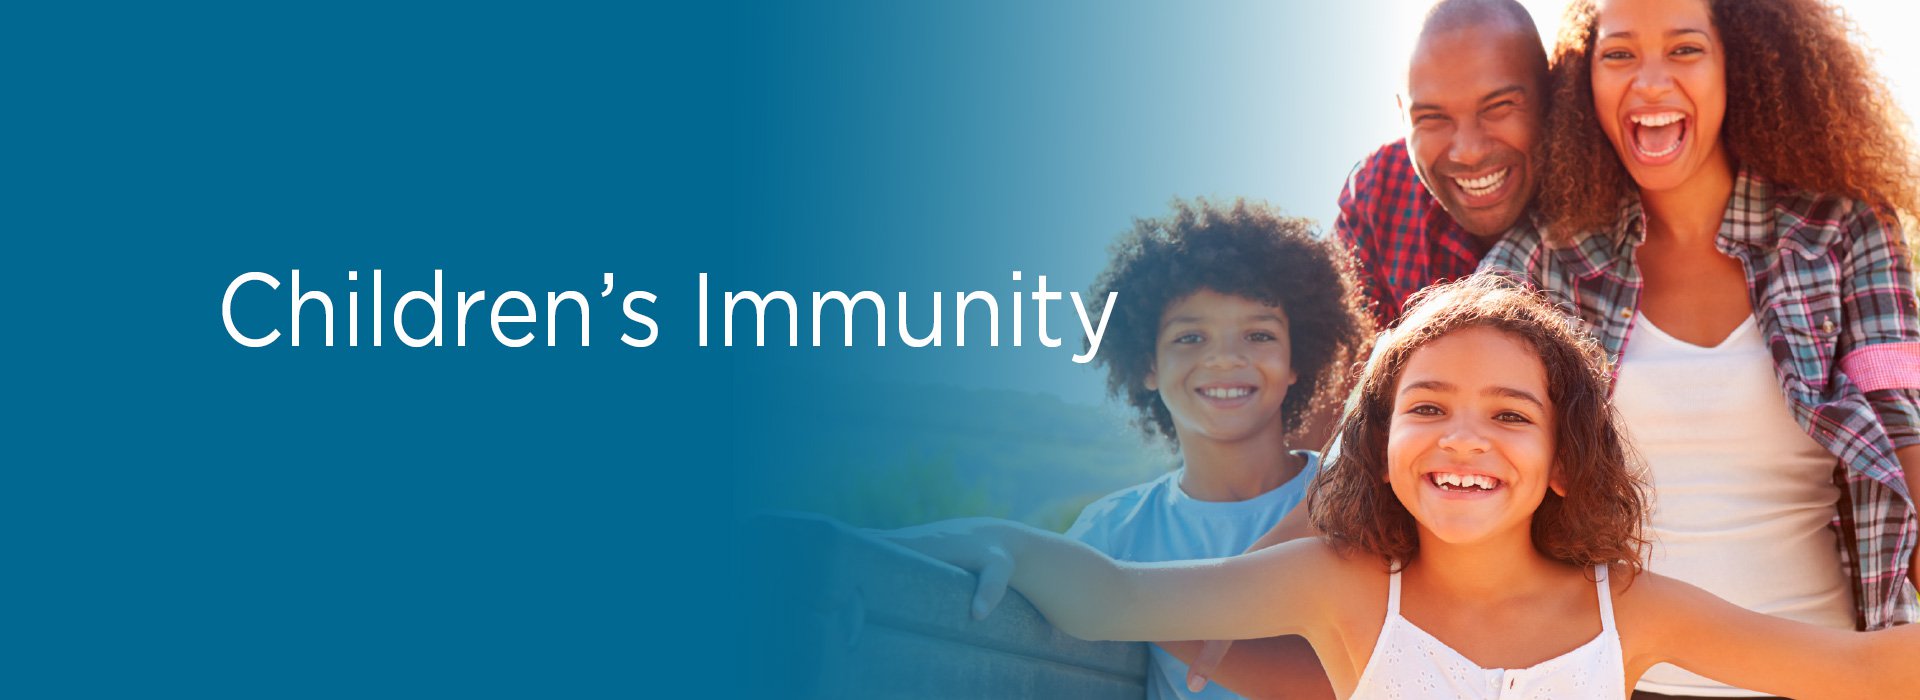 New Image International: Children's Immunity